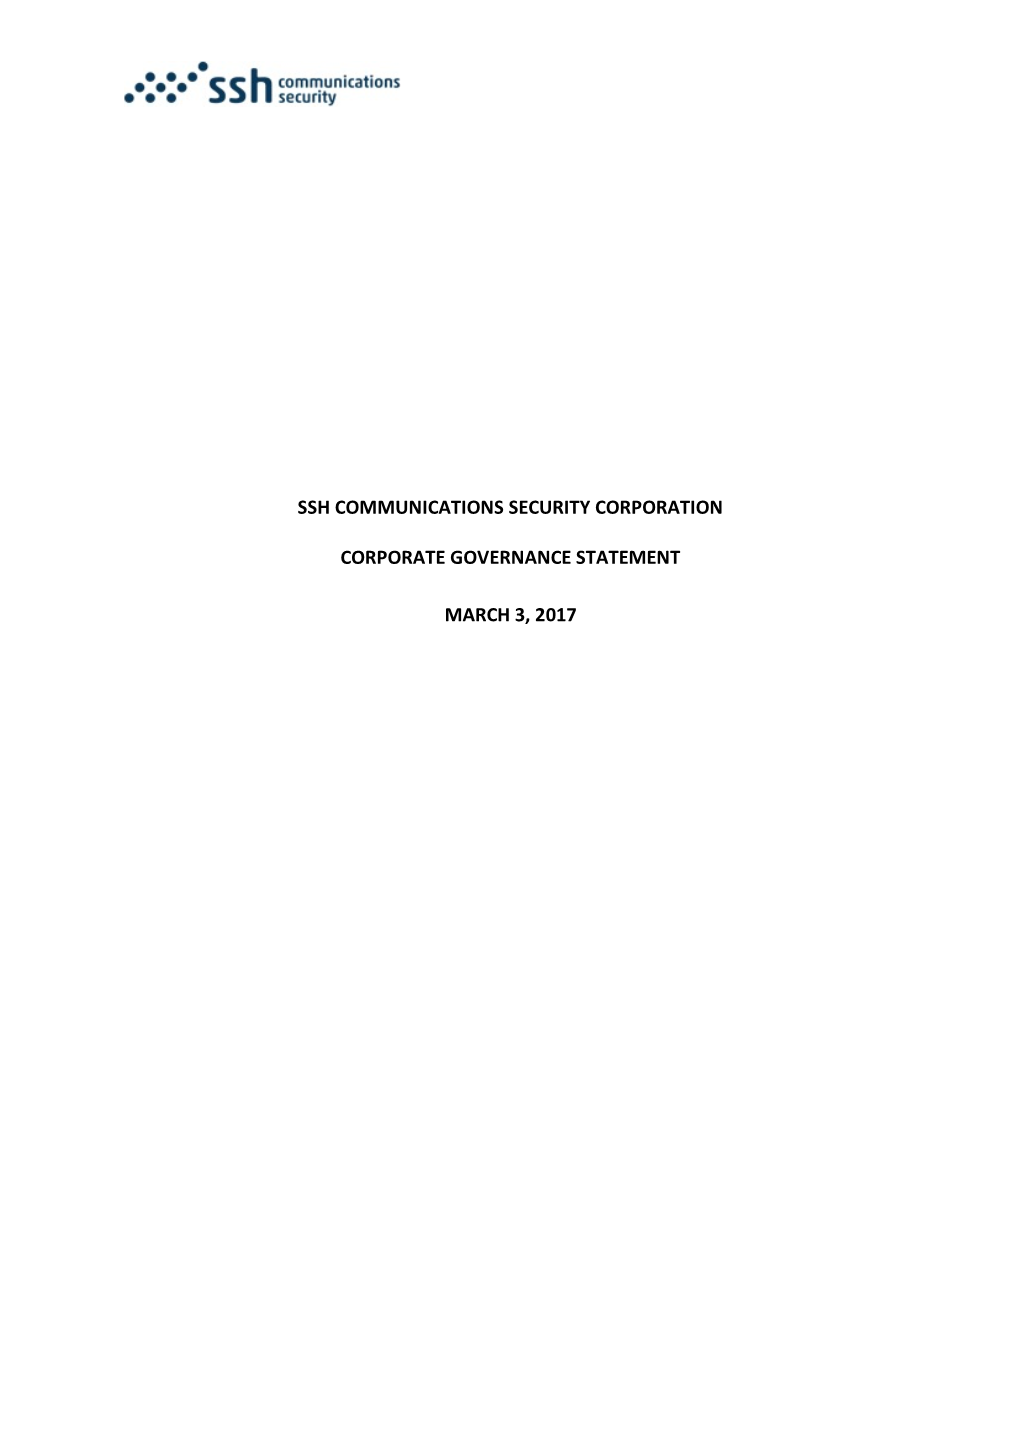 SSH Corporate Governance Statement 2017